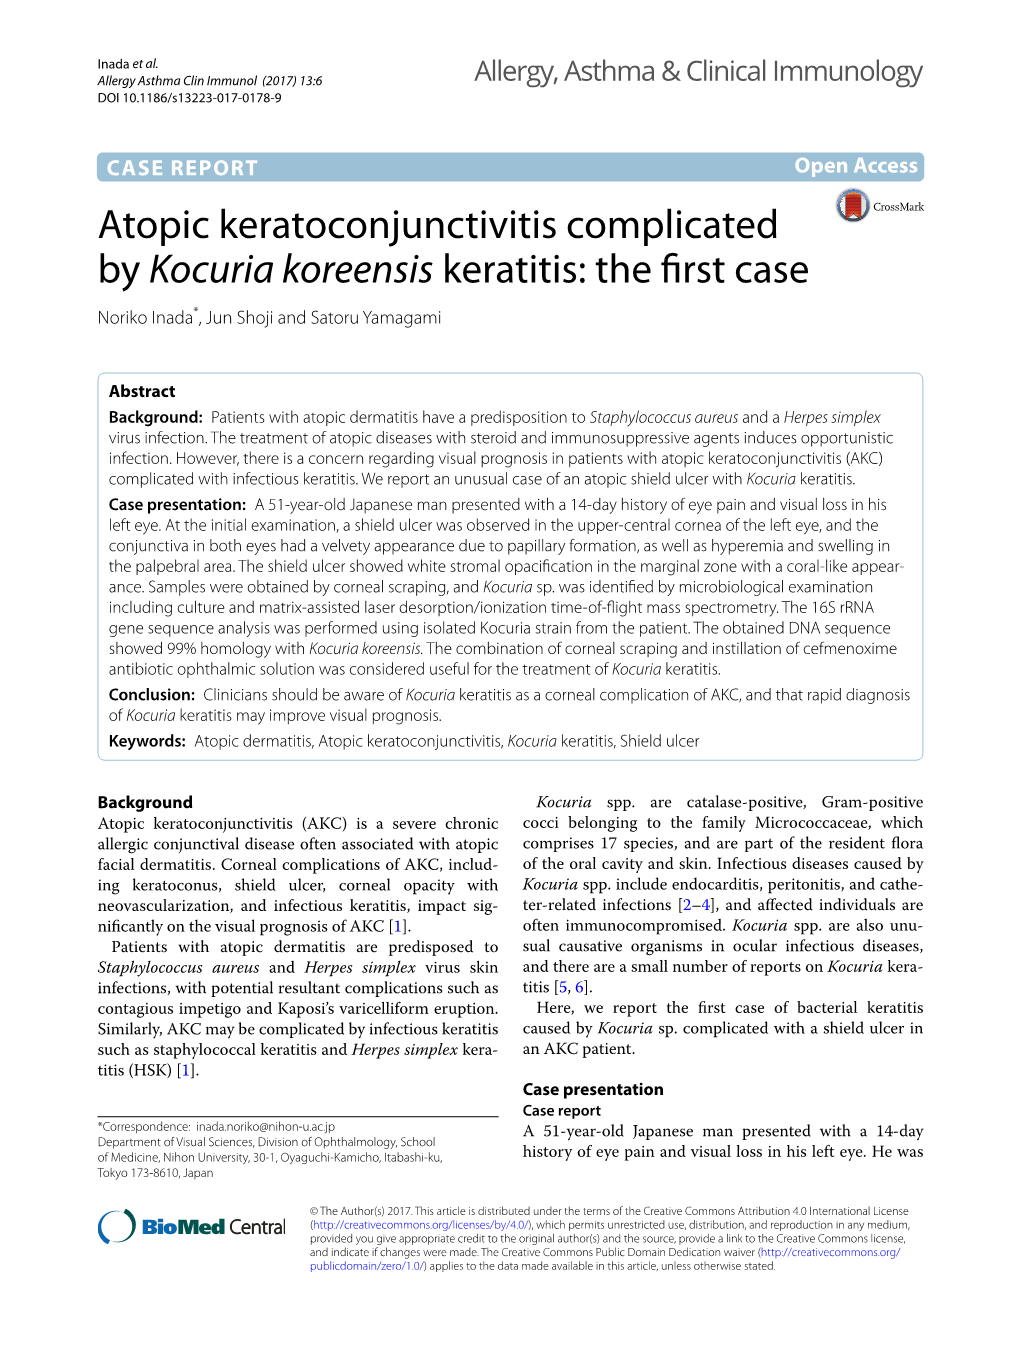 Atopic Keratoconjunctivitis Complicated by Kocuria Koreensis Keratitis: the First Case Noriko Inada*, Jun Shoji and Satoru Yamagami